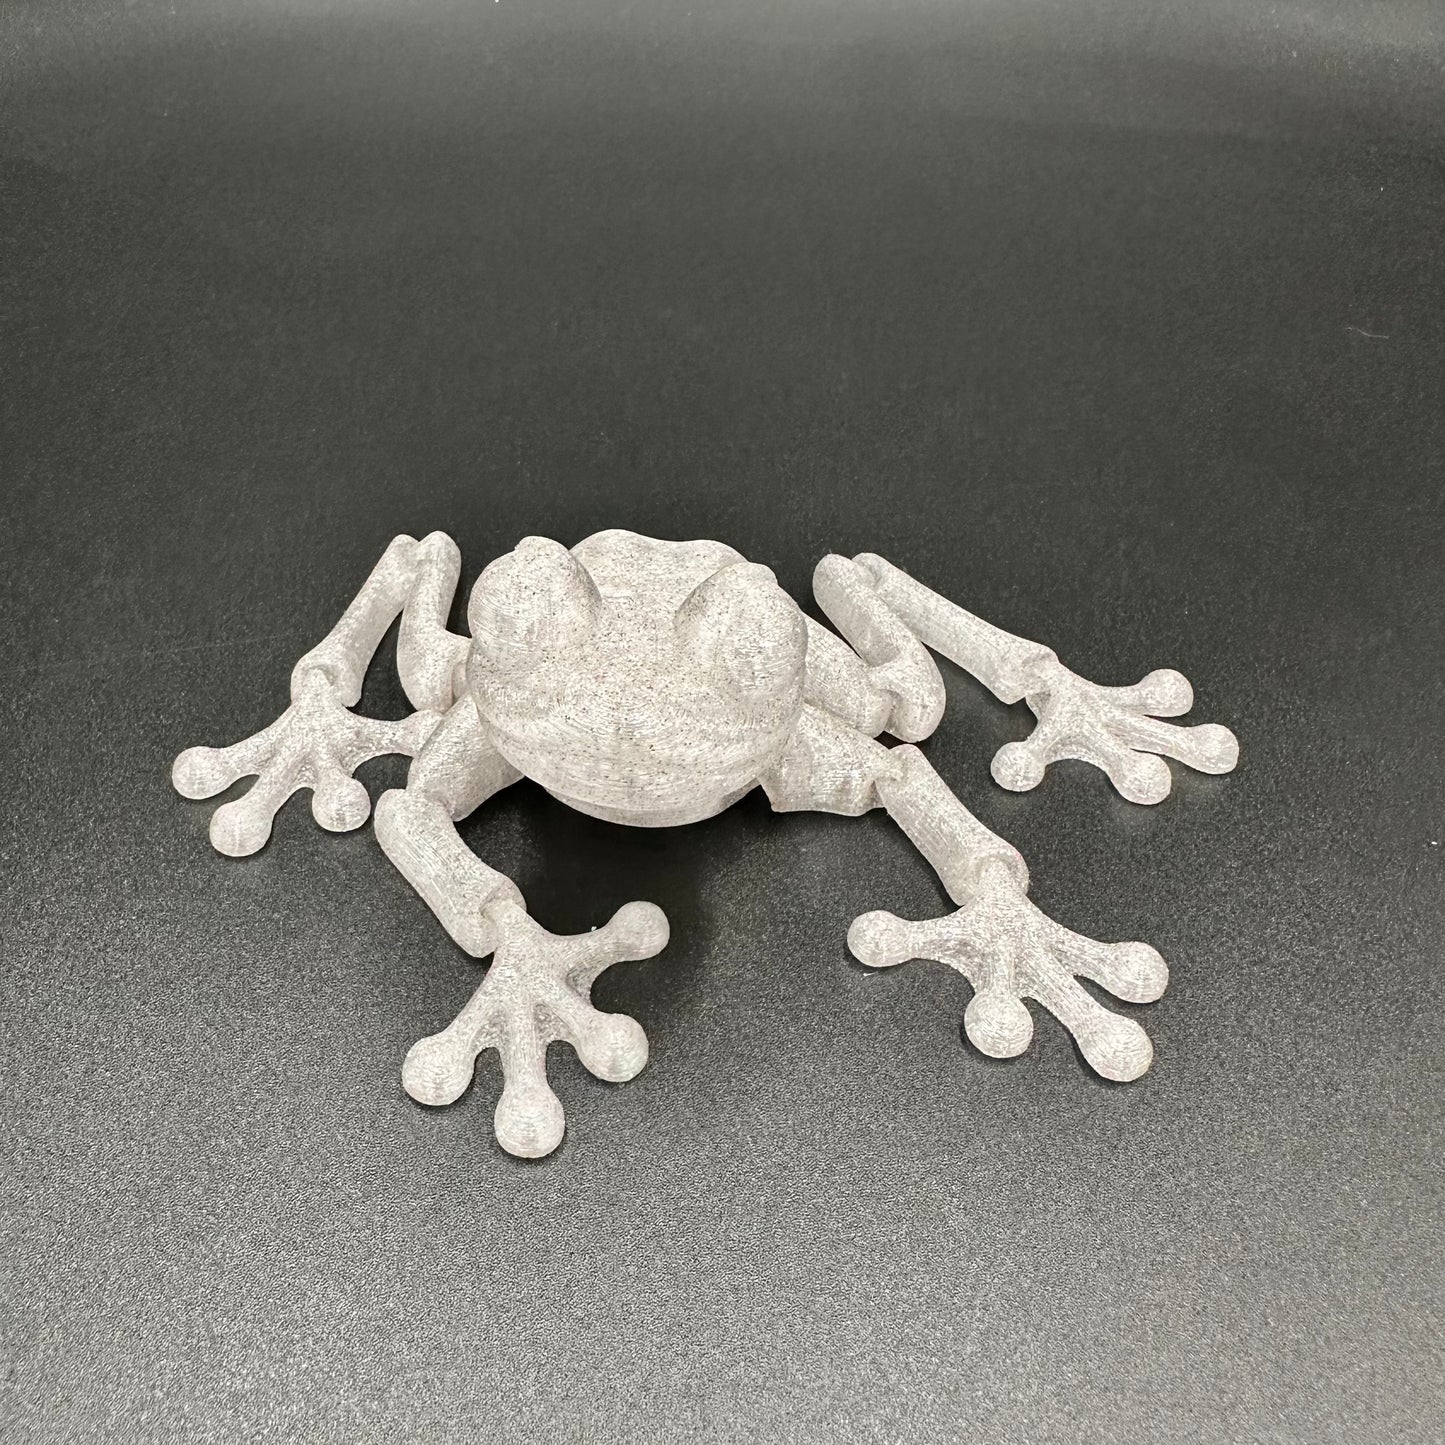 3D Printed Flexi Frog